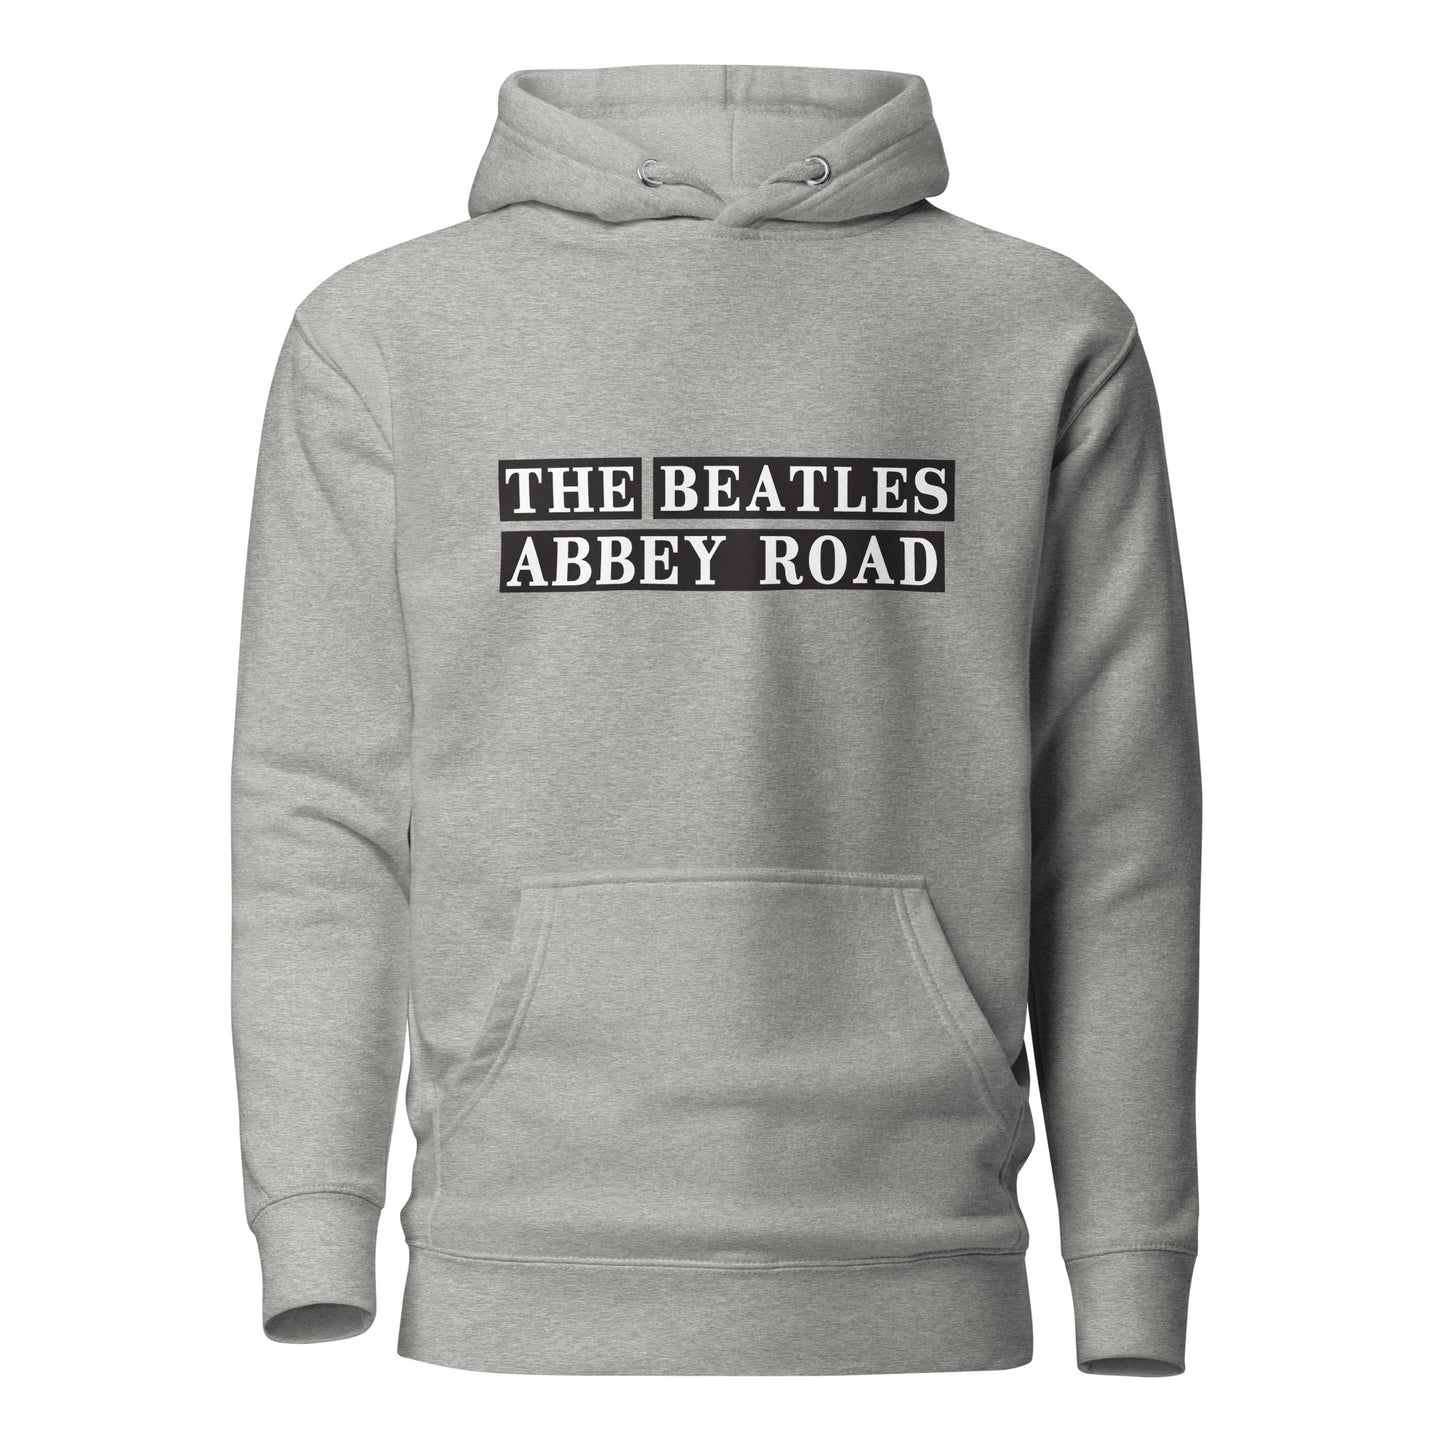 The Beatles Abbey Road Athletic Hooded Fleece